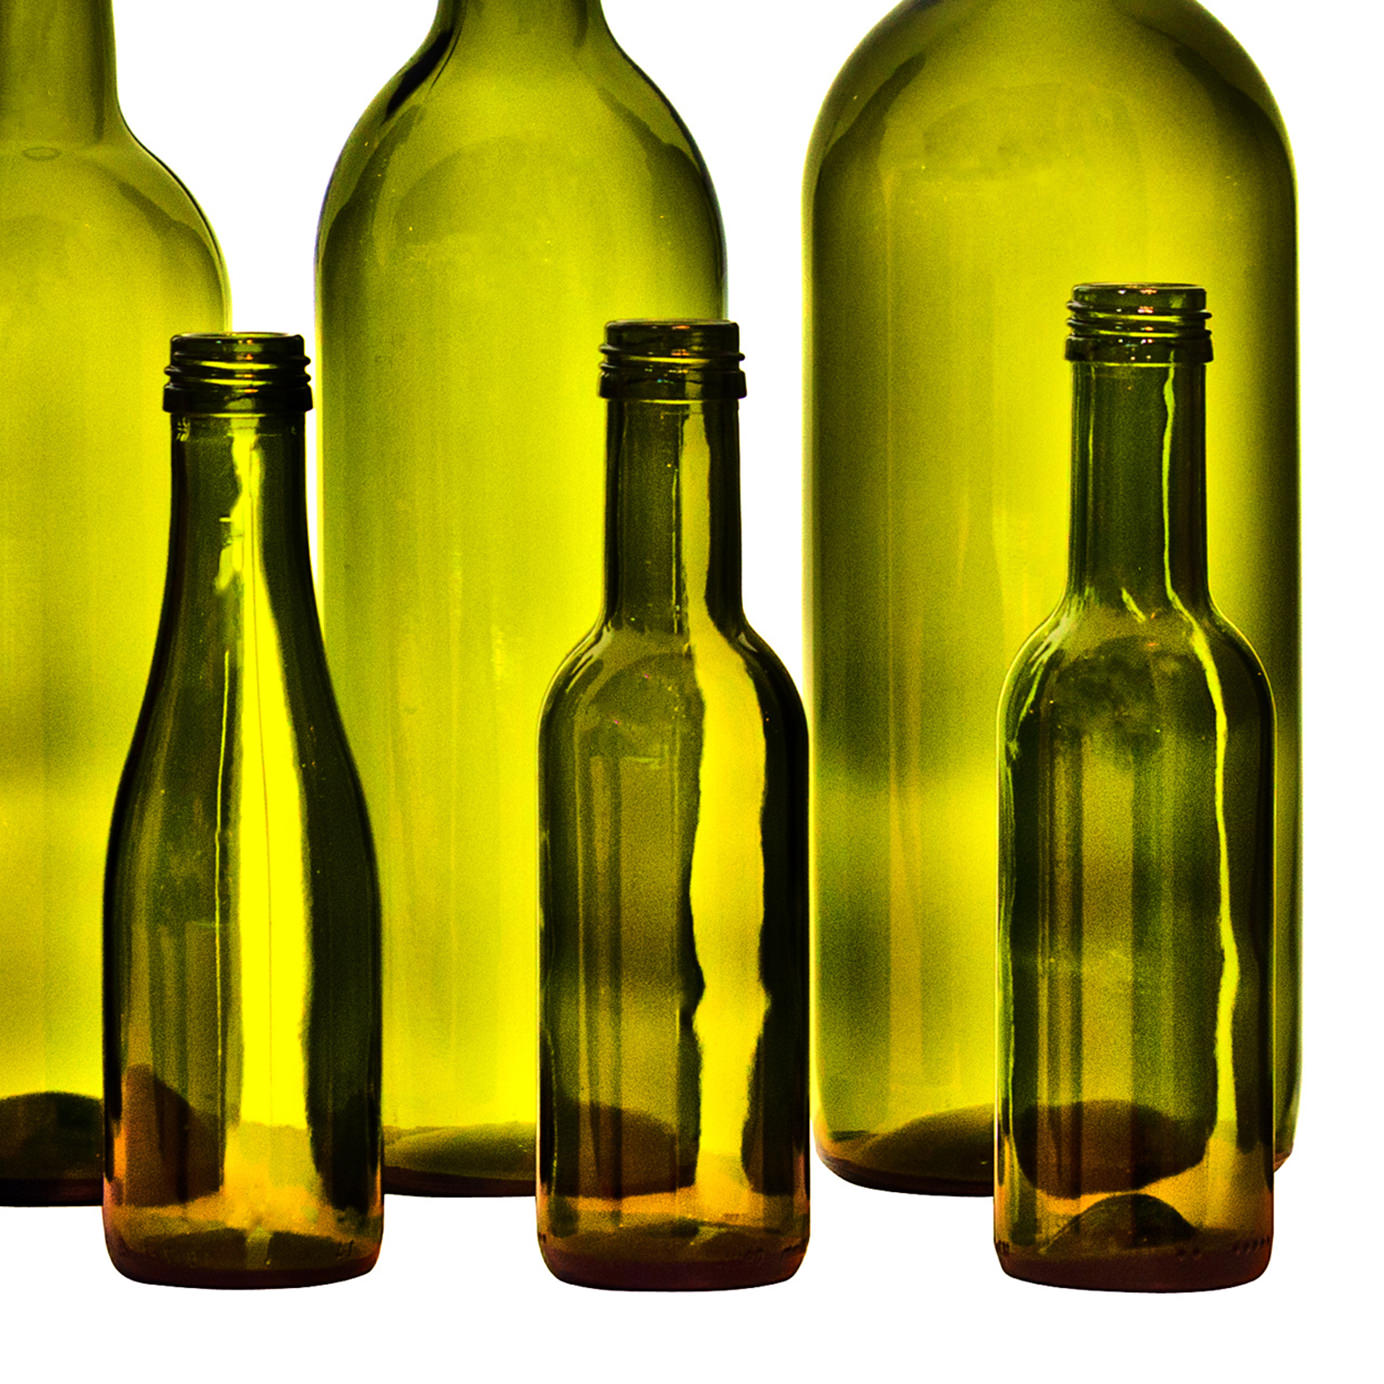 In Defense of the Half-Bottle of Wine